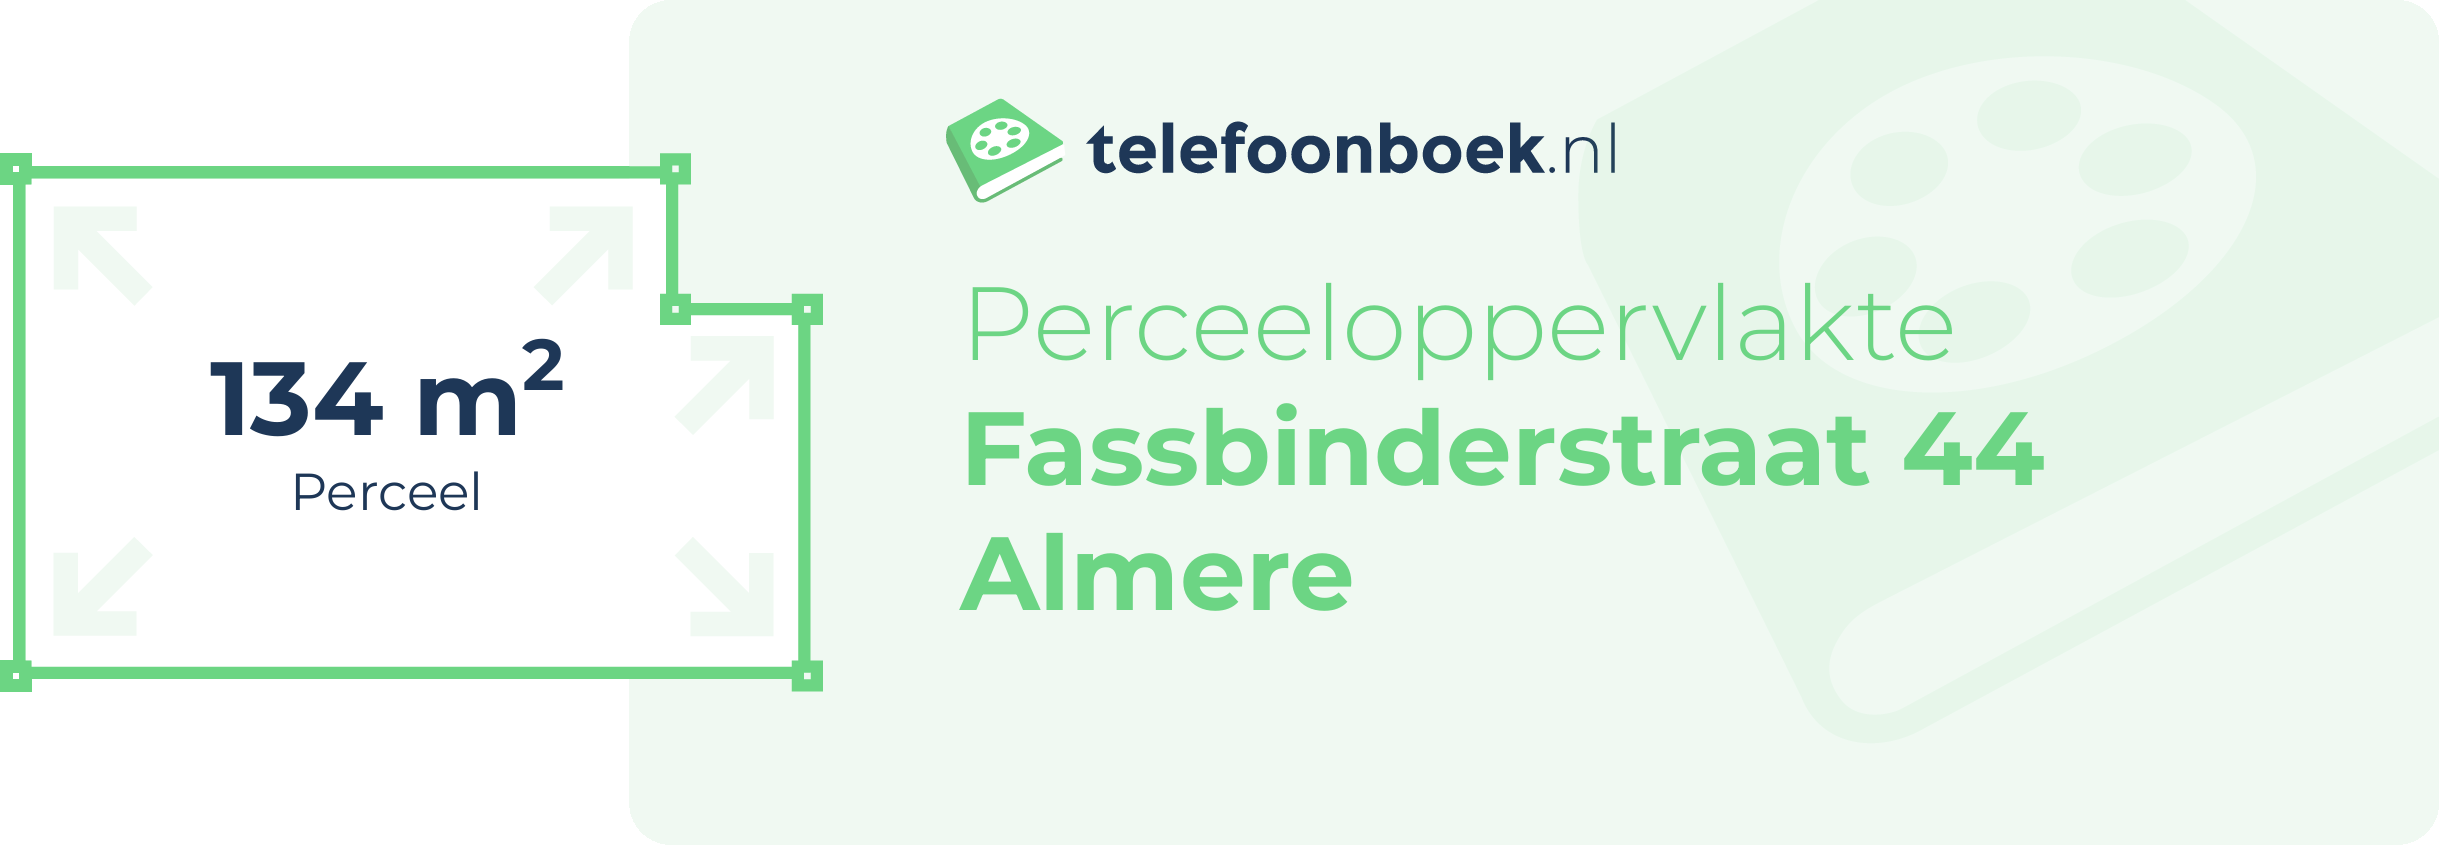 Perceeloppervlakte Fassbinderstraat 44 Almere